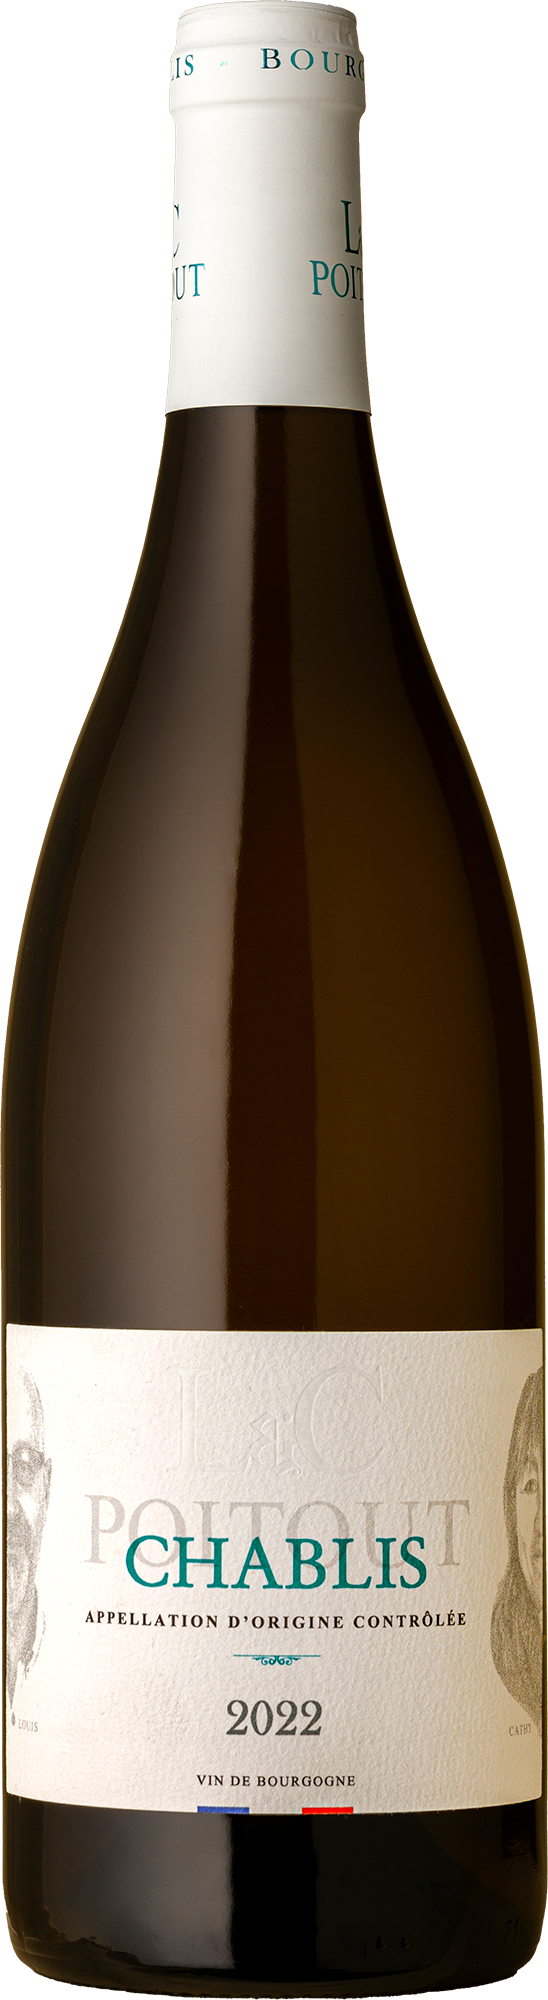 L&C Poitout - Chablis Chardonnay 2022 White Wine